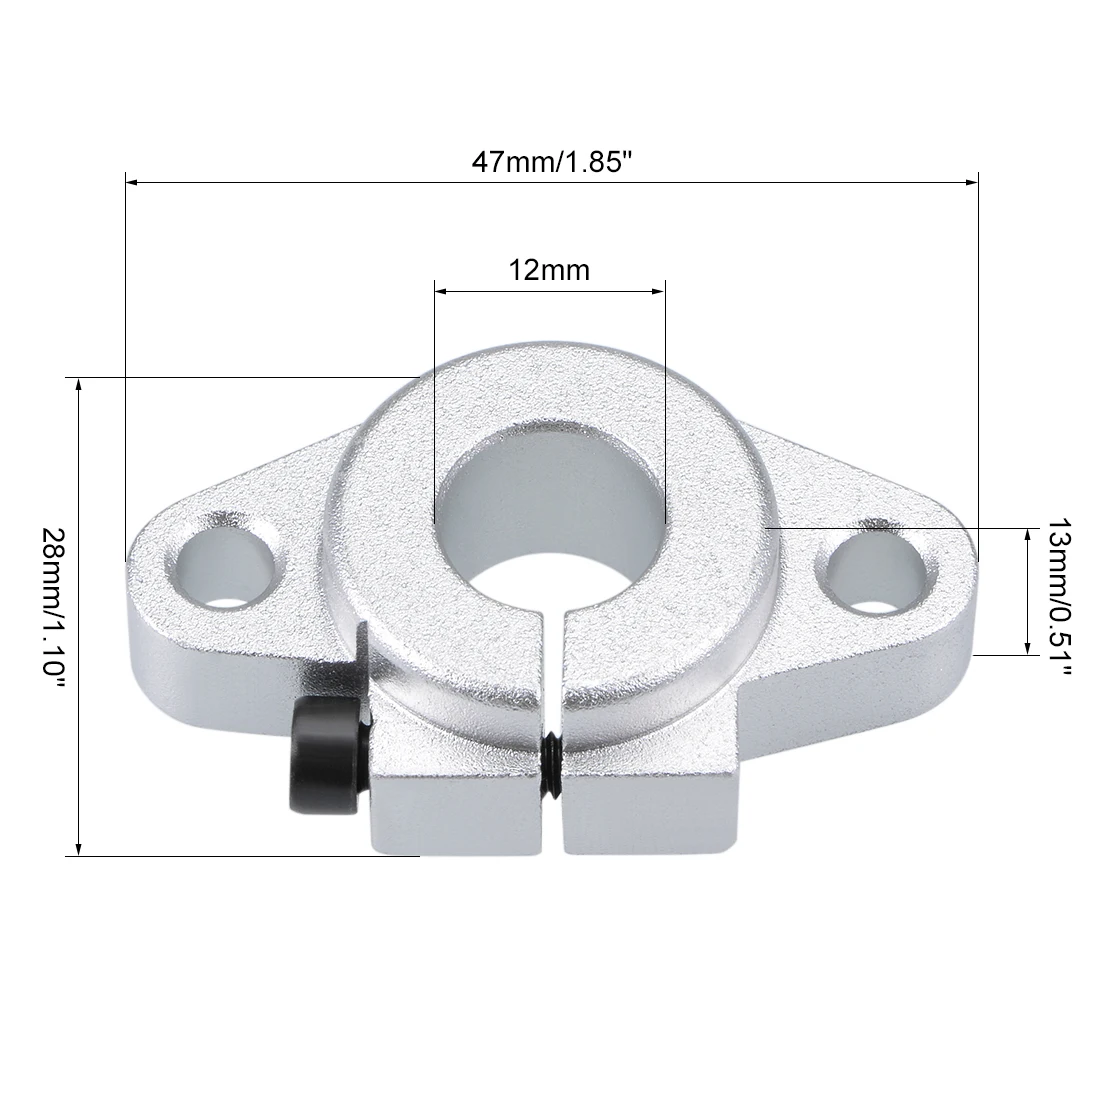 uxcell 20mm Shaft Support SHF20 Flange Mount Linear Motion Slide Rail Guide Blocks for CNC 3D Printer Pack of 2